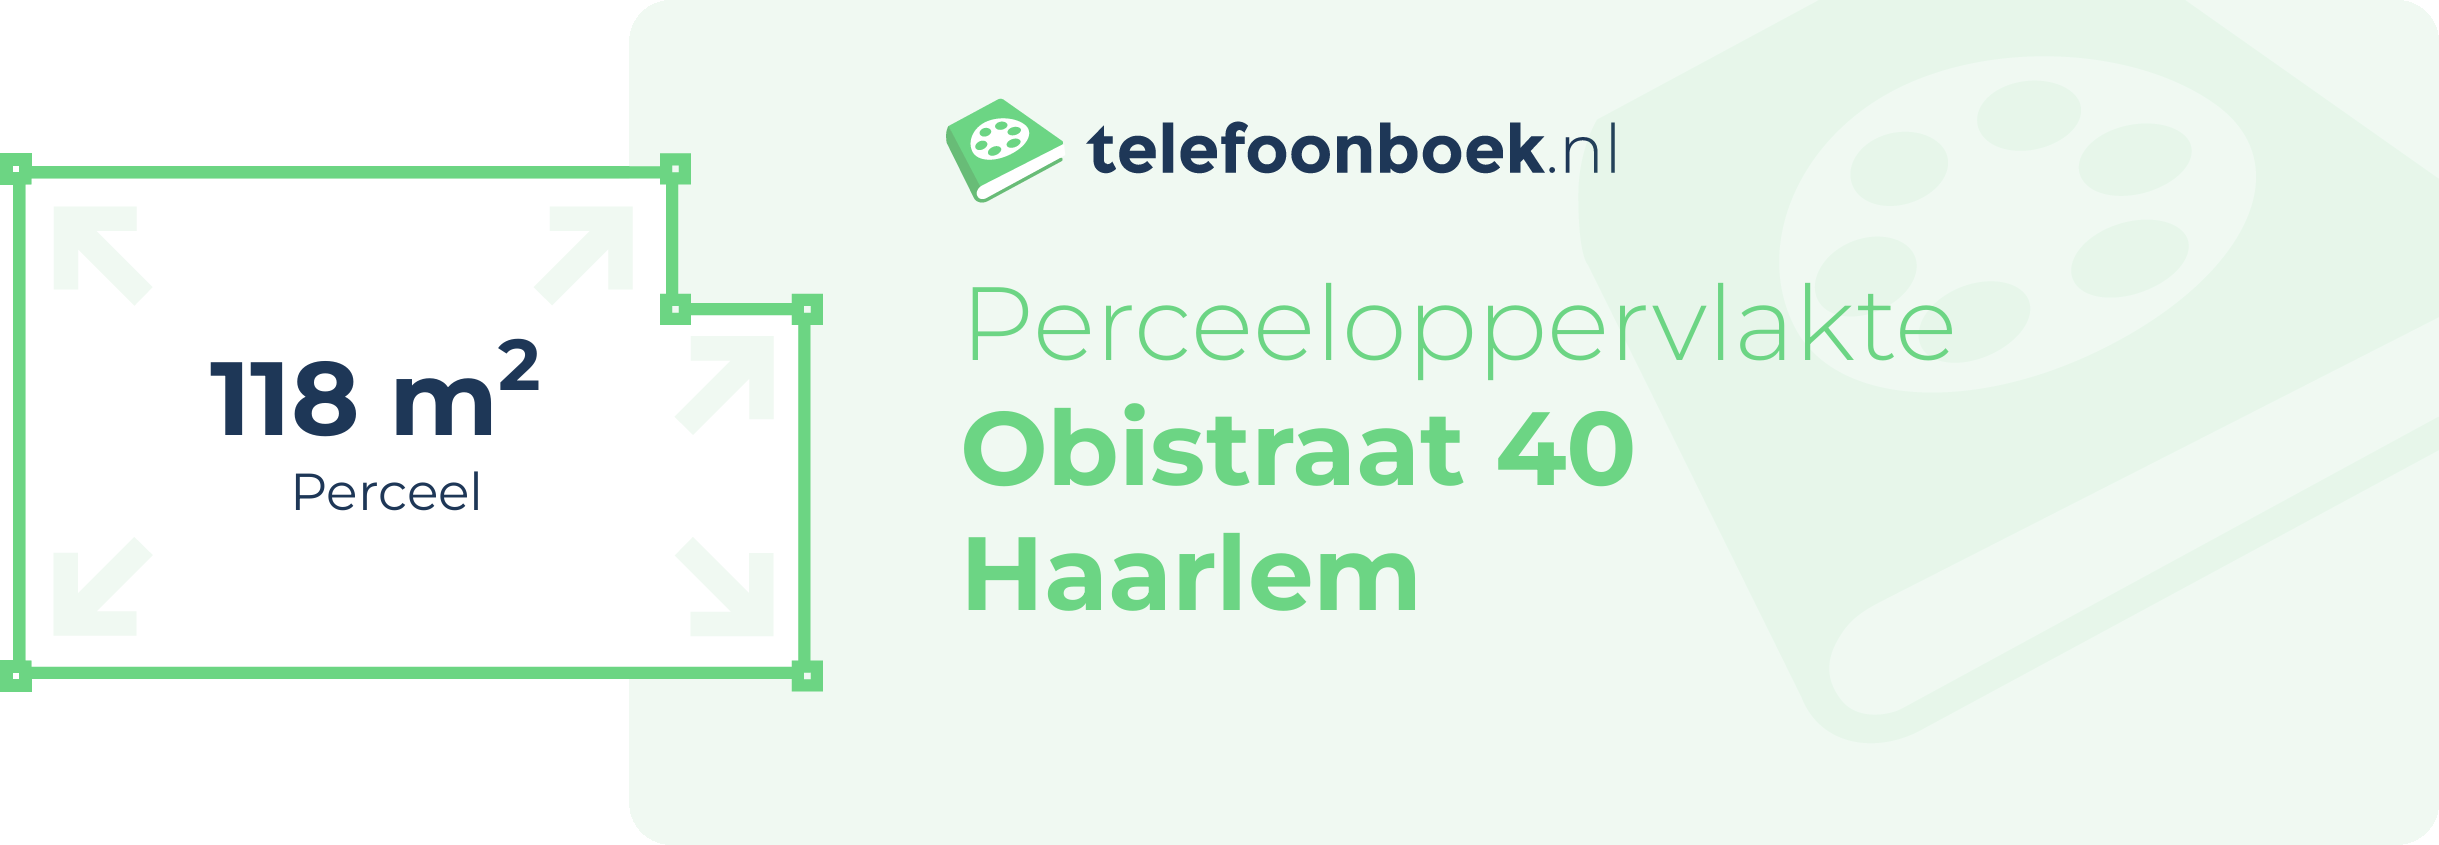 Perceeloppervlakte Obistraat 40 Haarlem